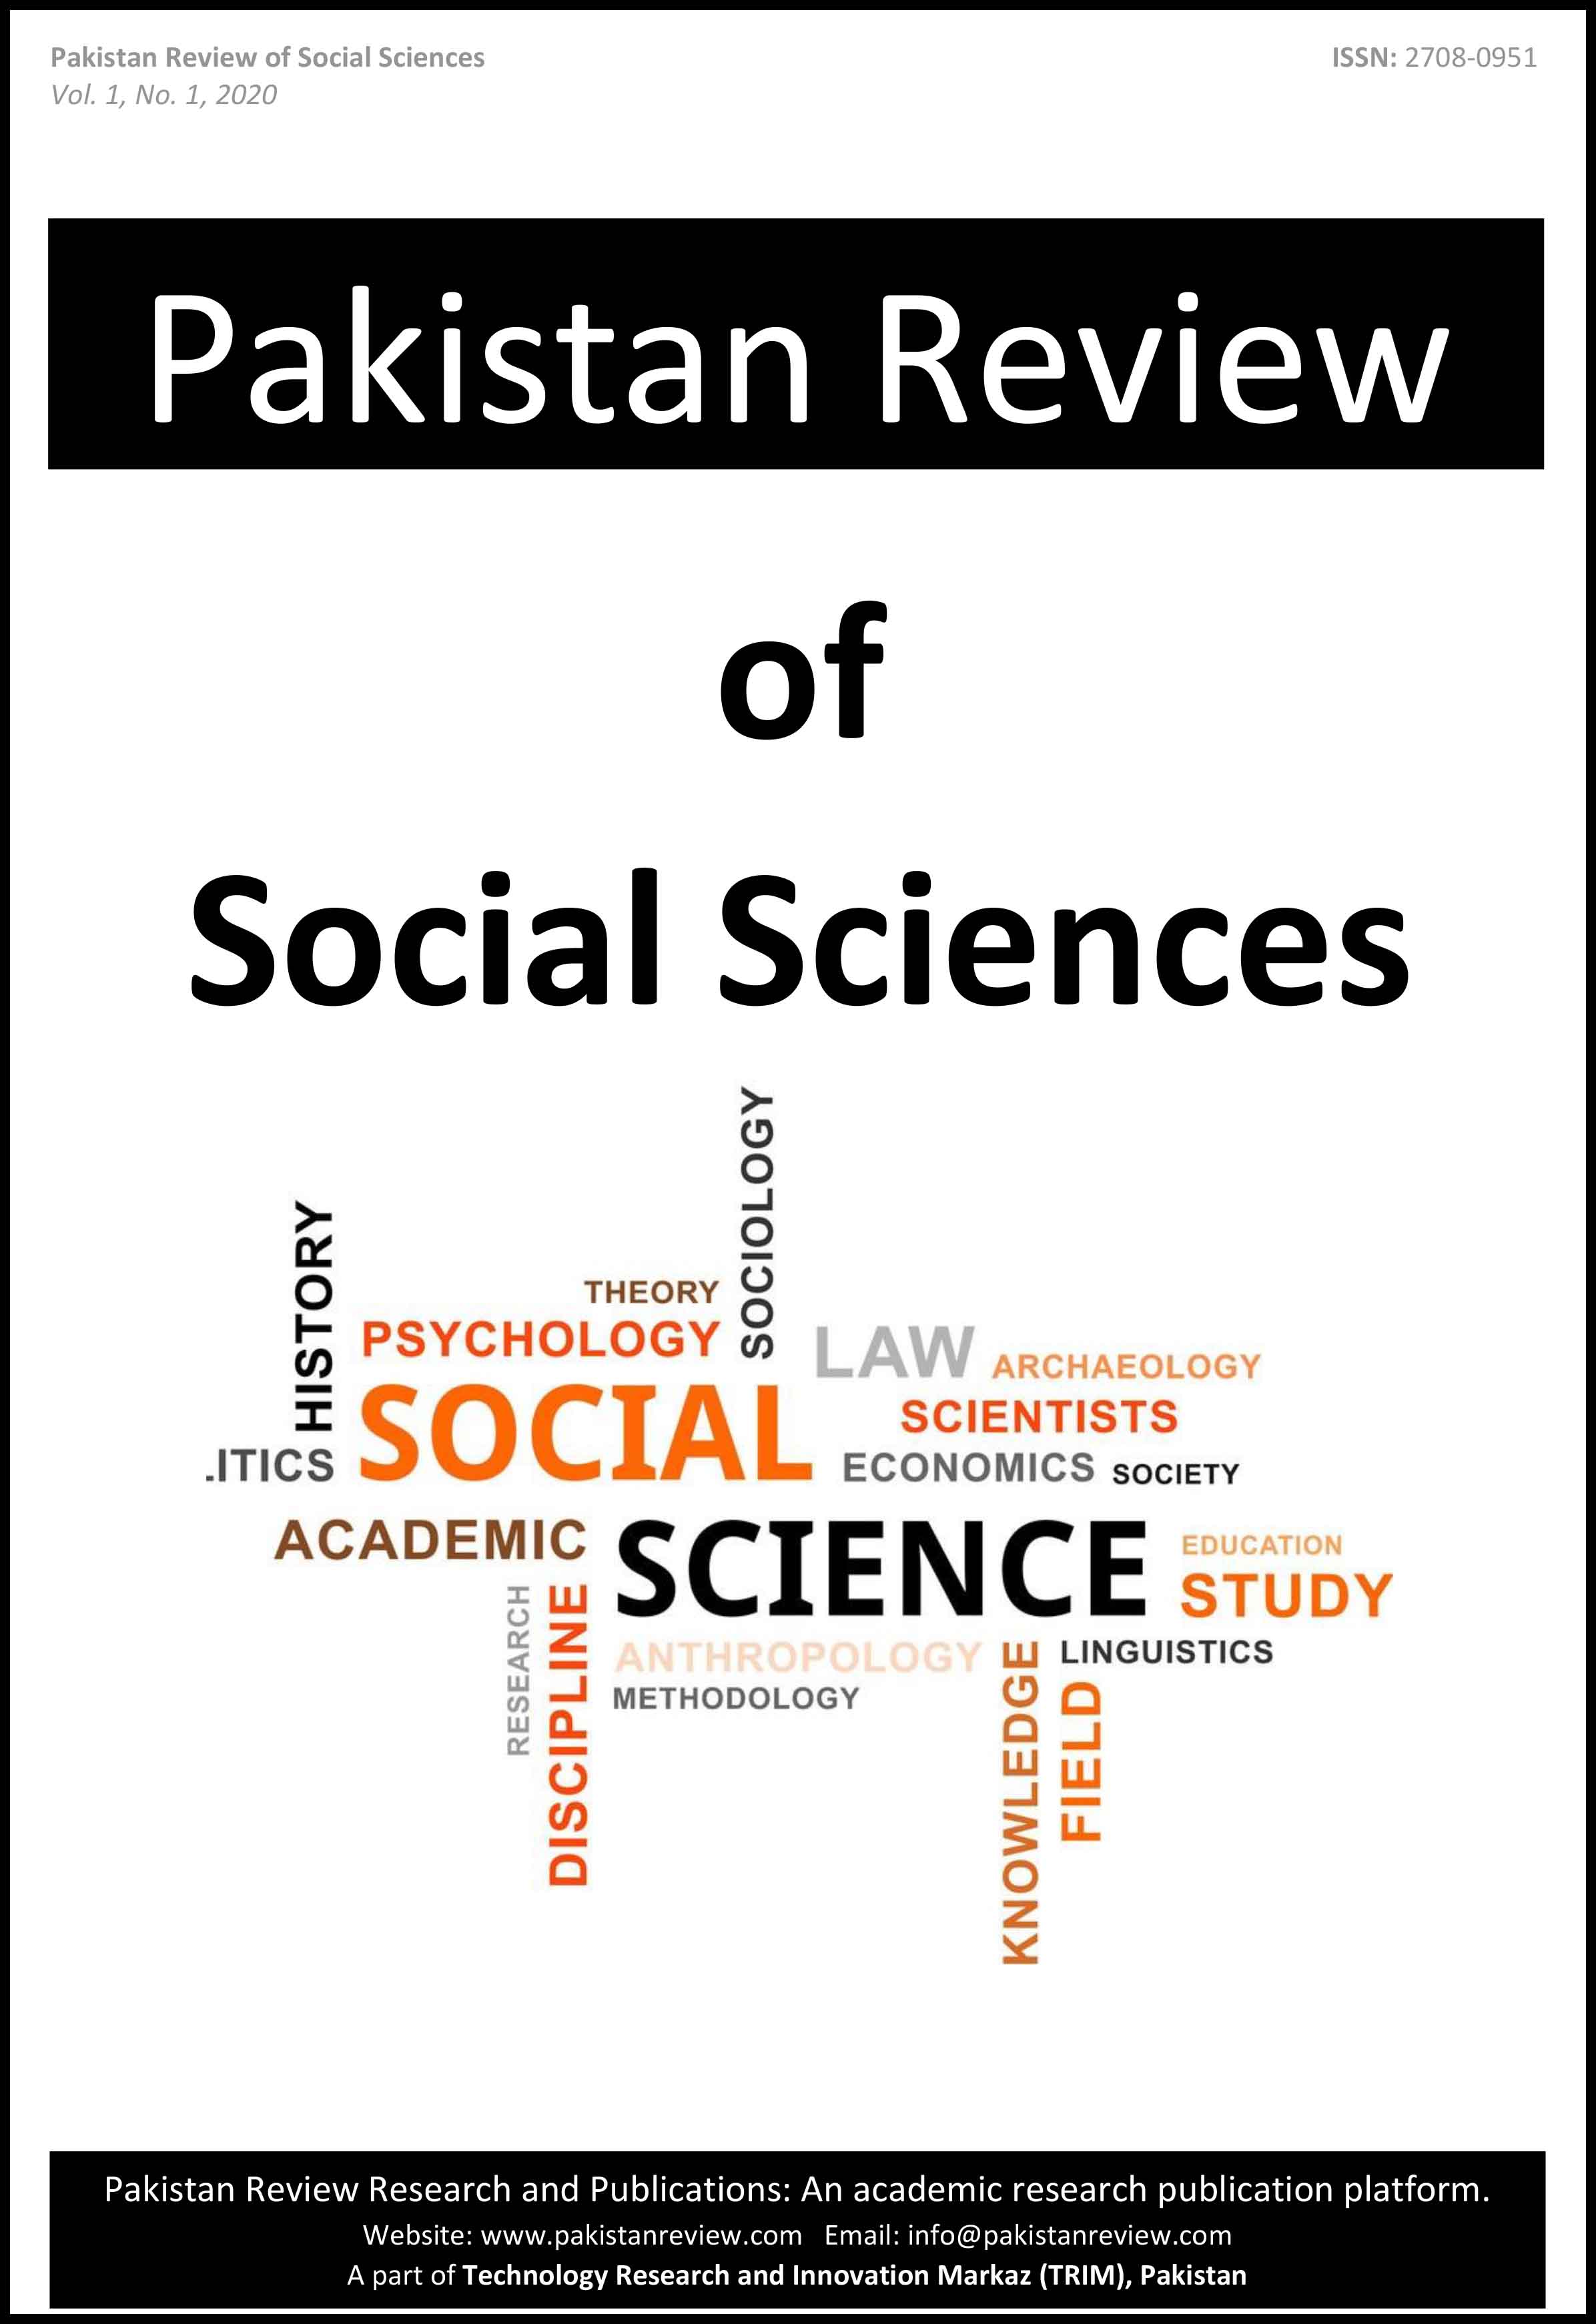 media research topics in pakistan